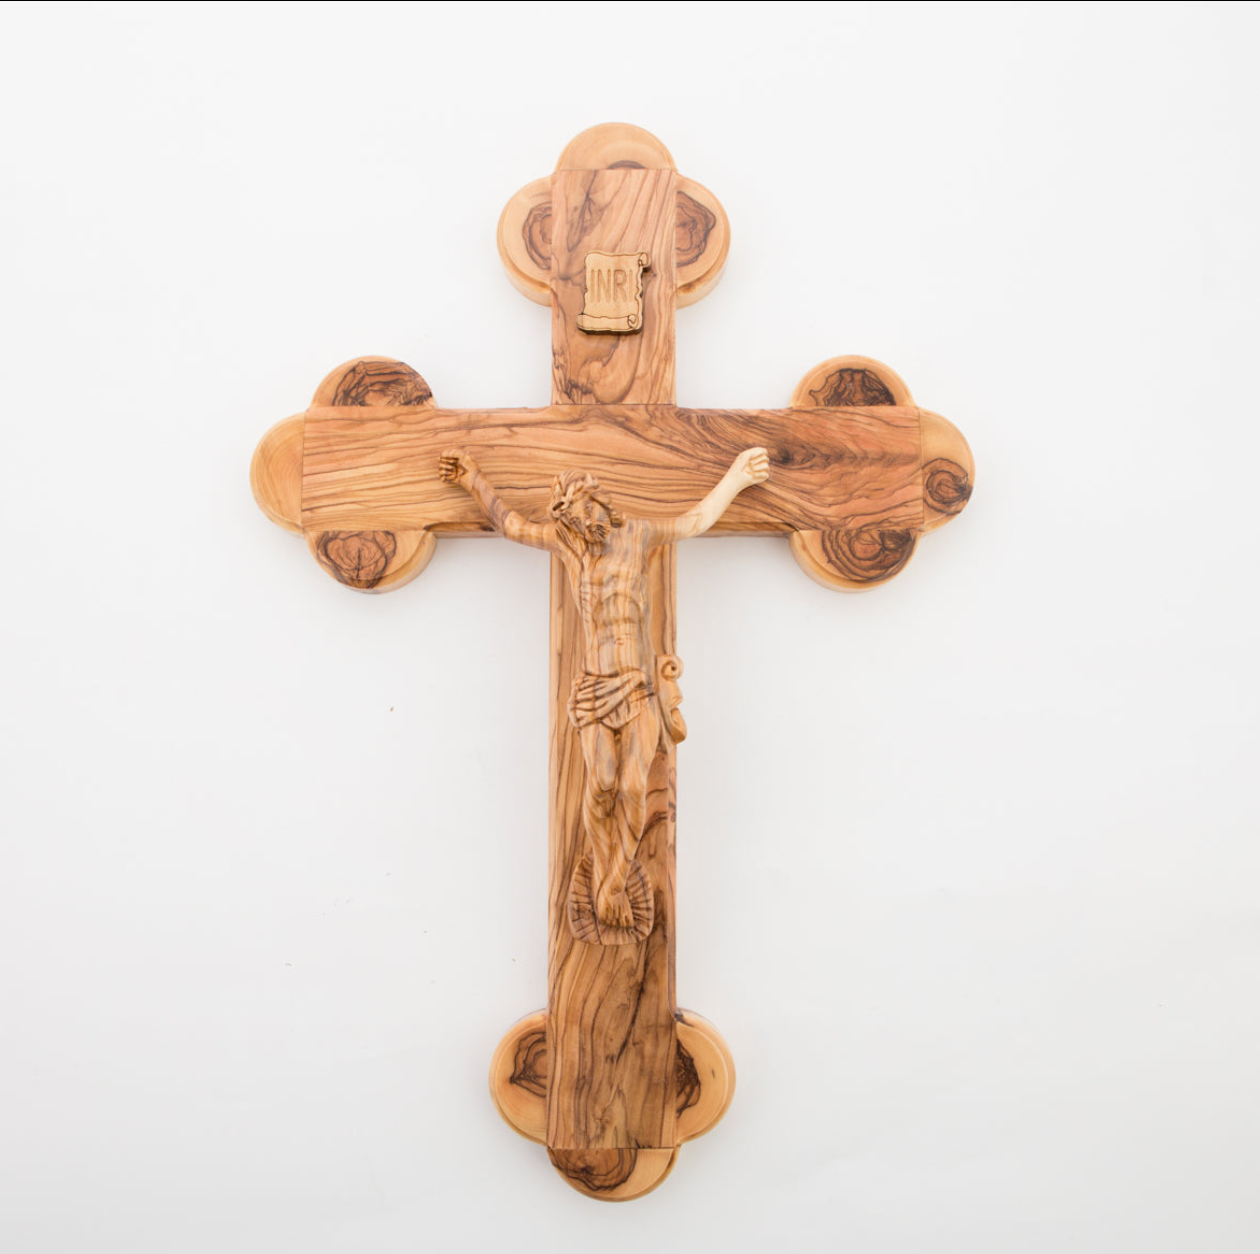 Hands Crossed on the Cross' Wood Pendant